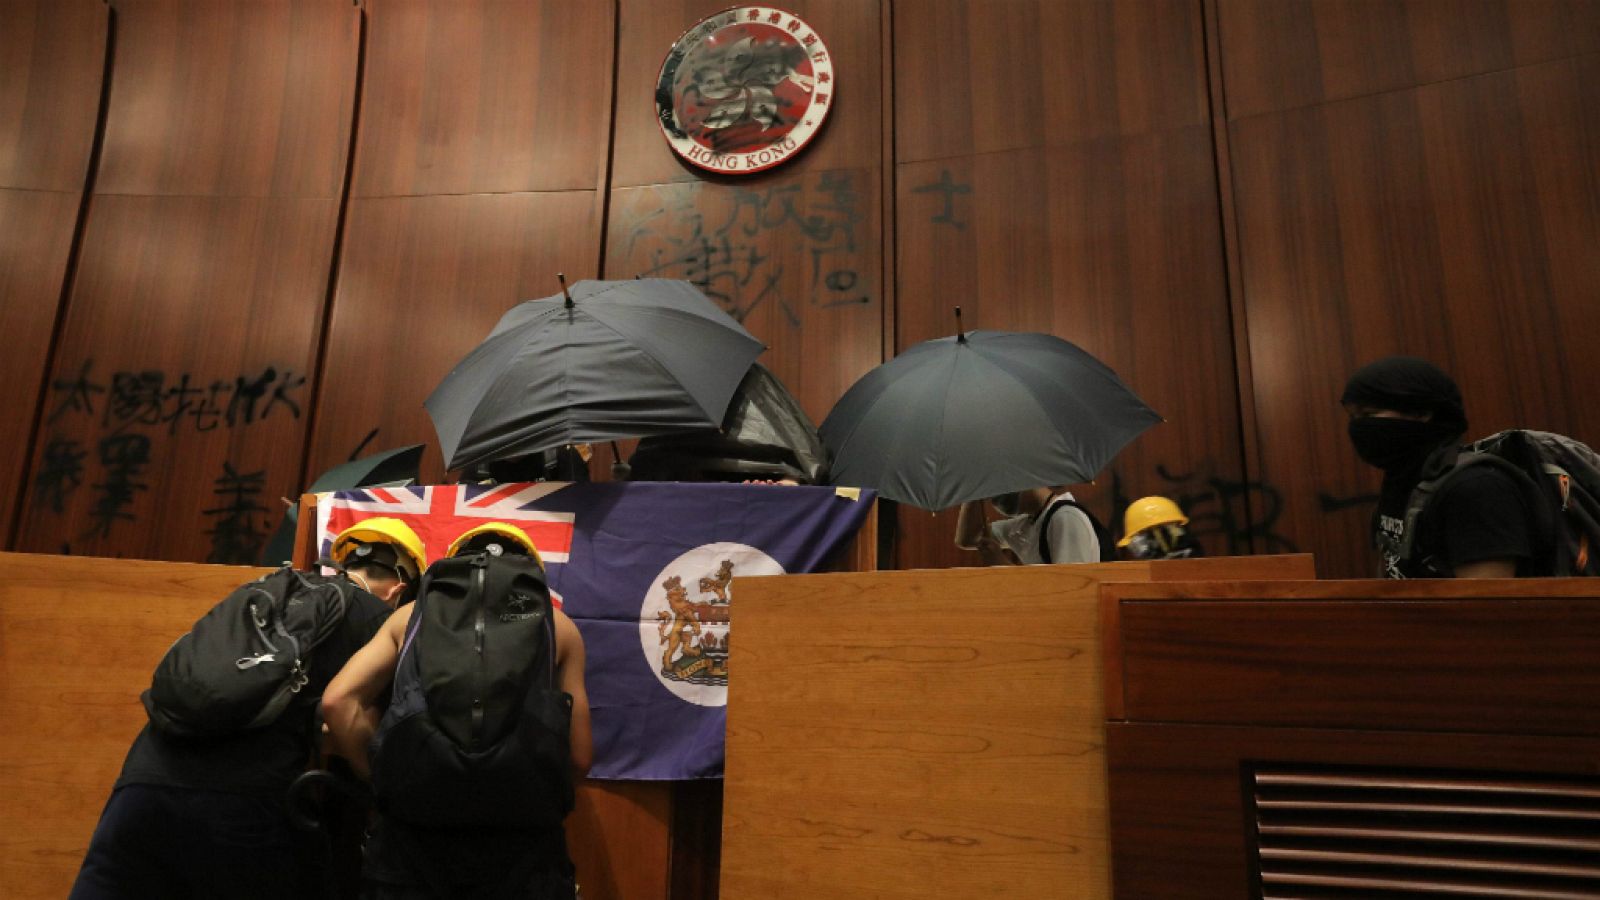 Hong Kong | Los manifestantes entran en el Parlamento de Hong Kong contra la "injerencia" de Pekín - RTVE.es